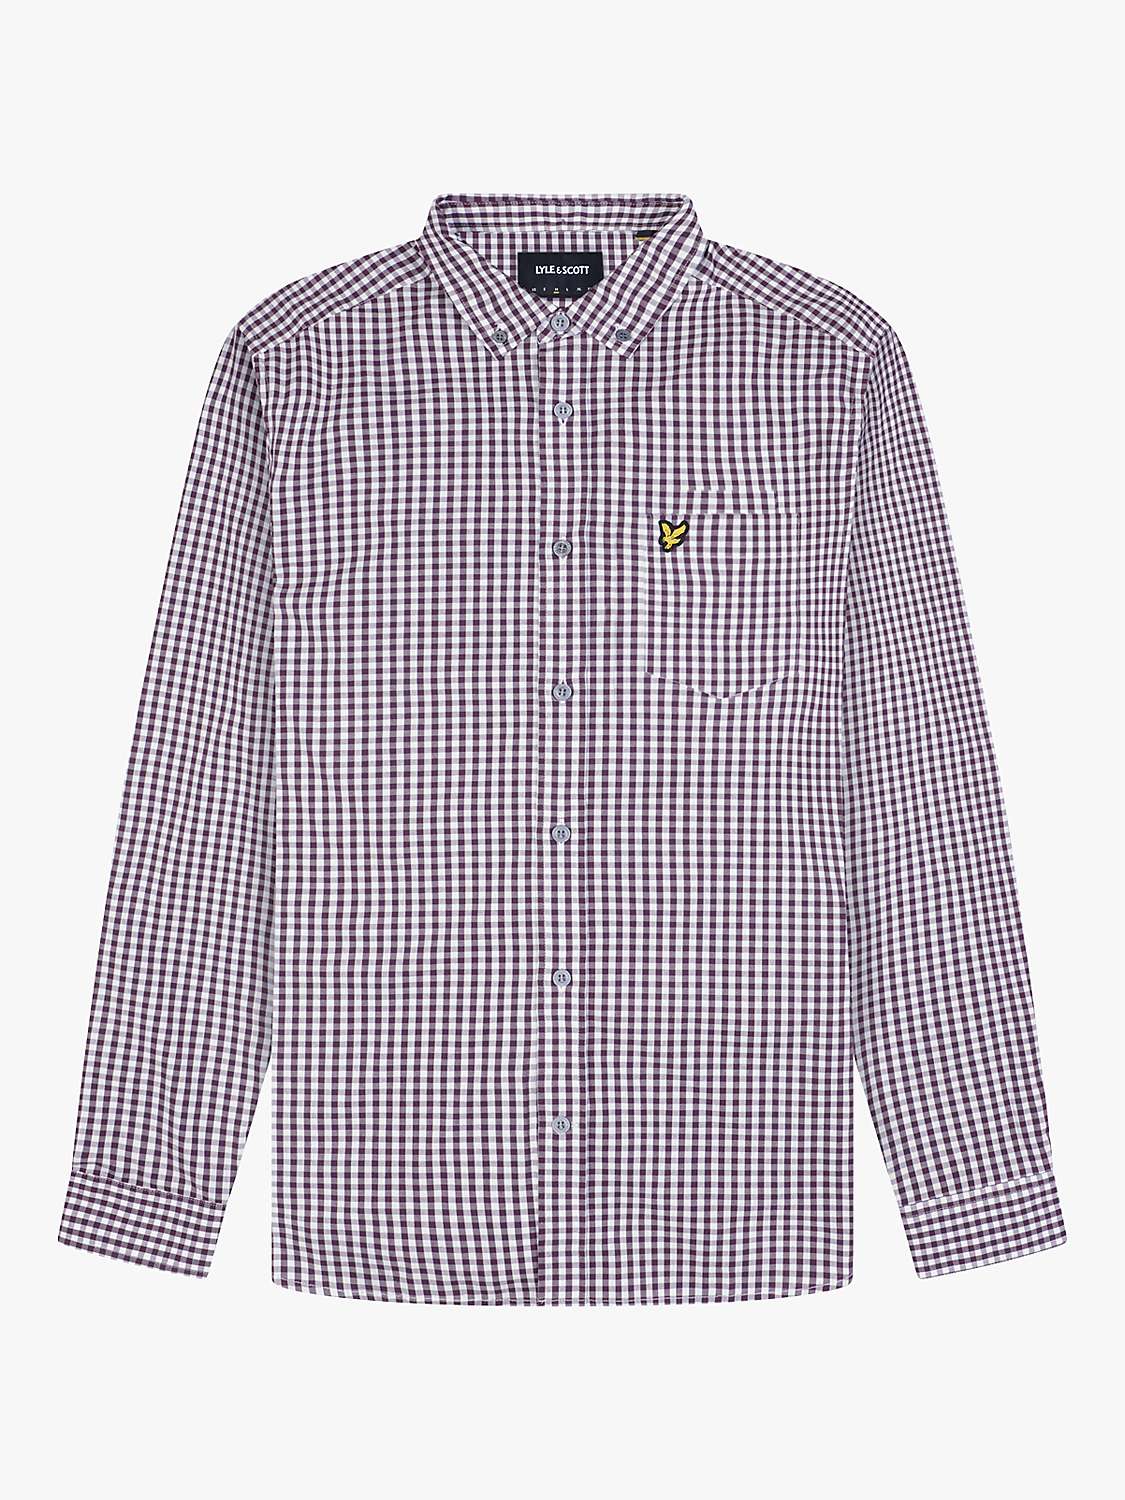 Buy Lyle & Scott Long Sleeve Gingham Shirt, Burgundy/White Online at johnlewis.com